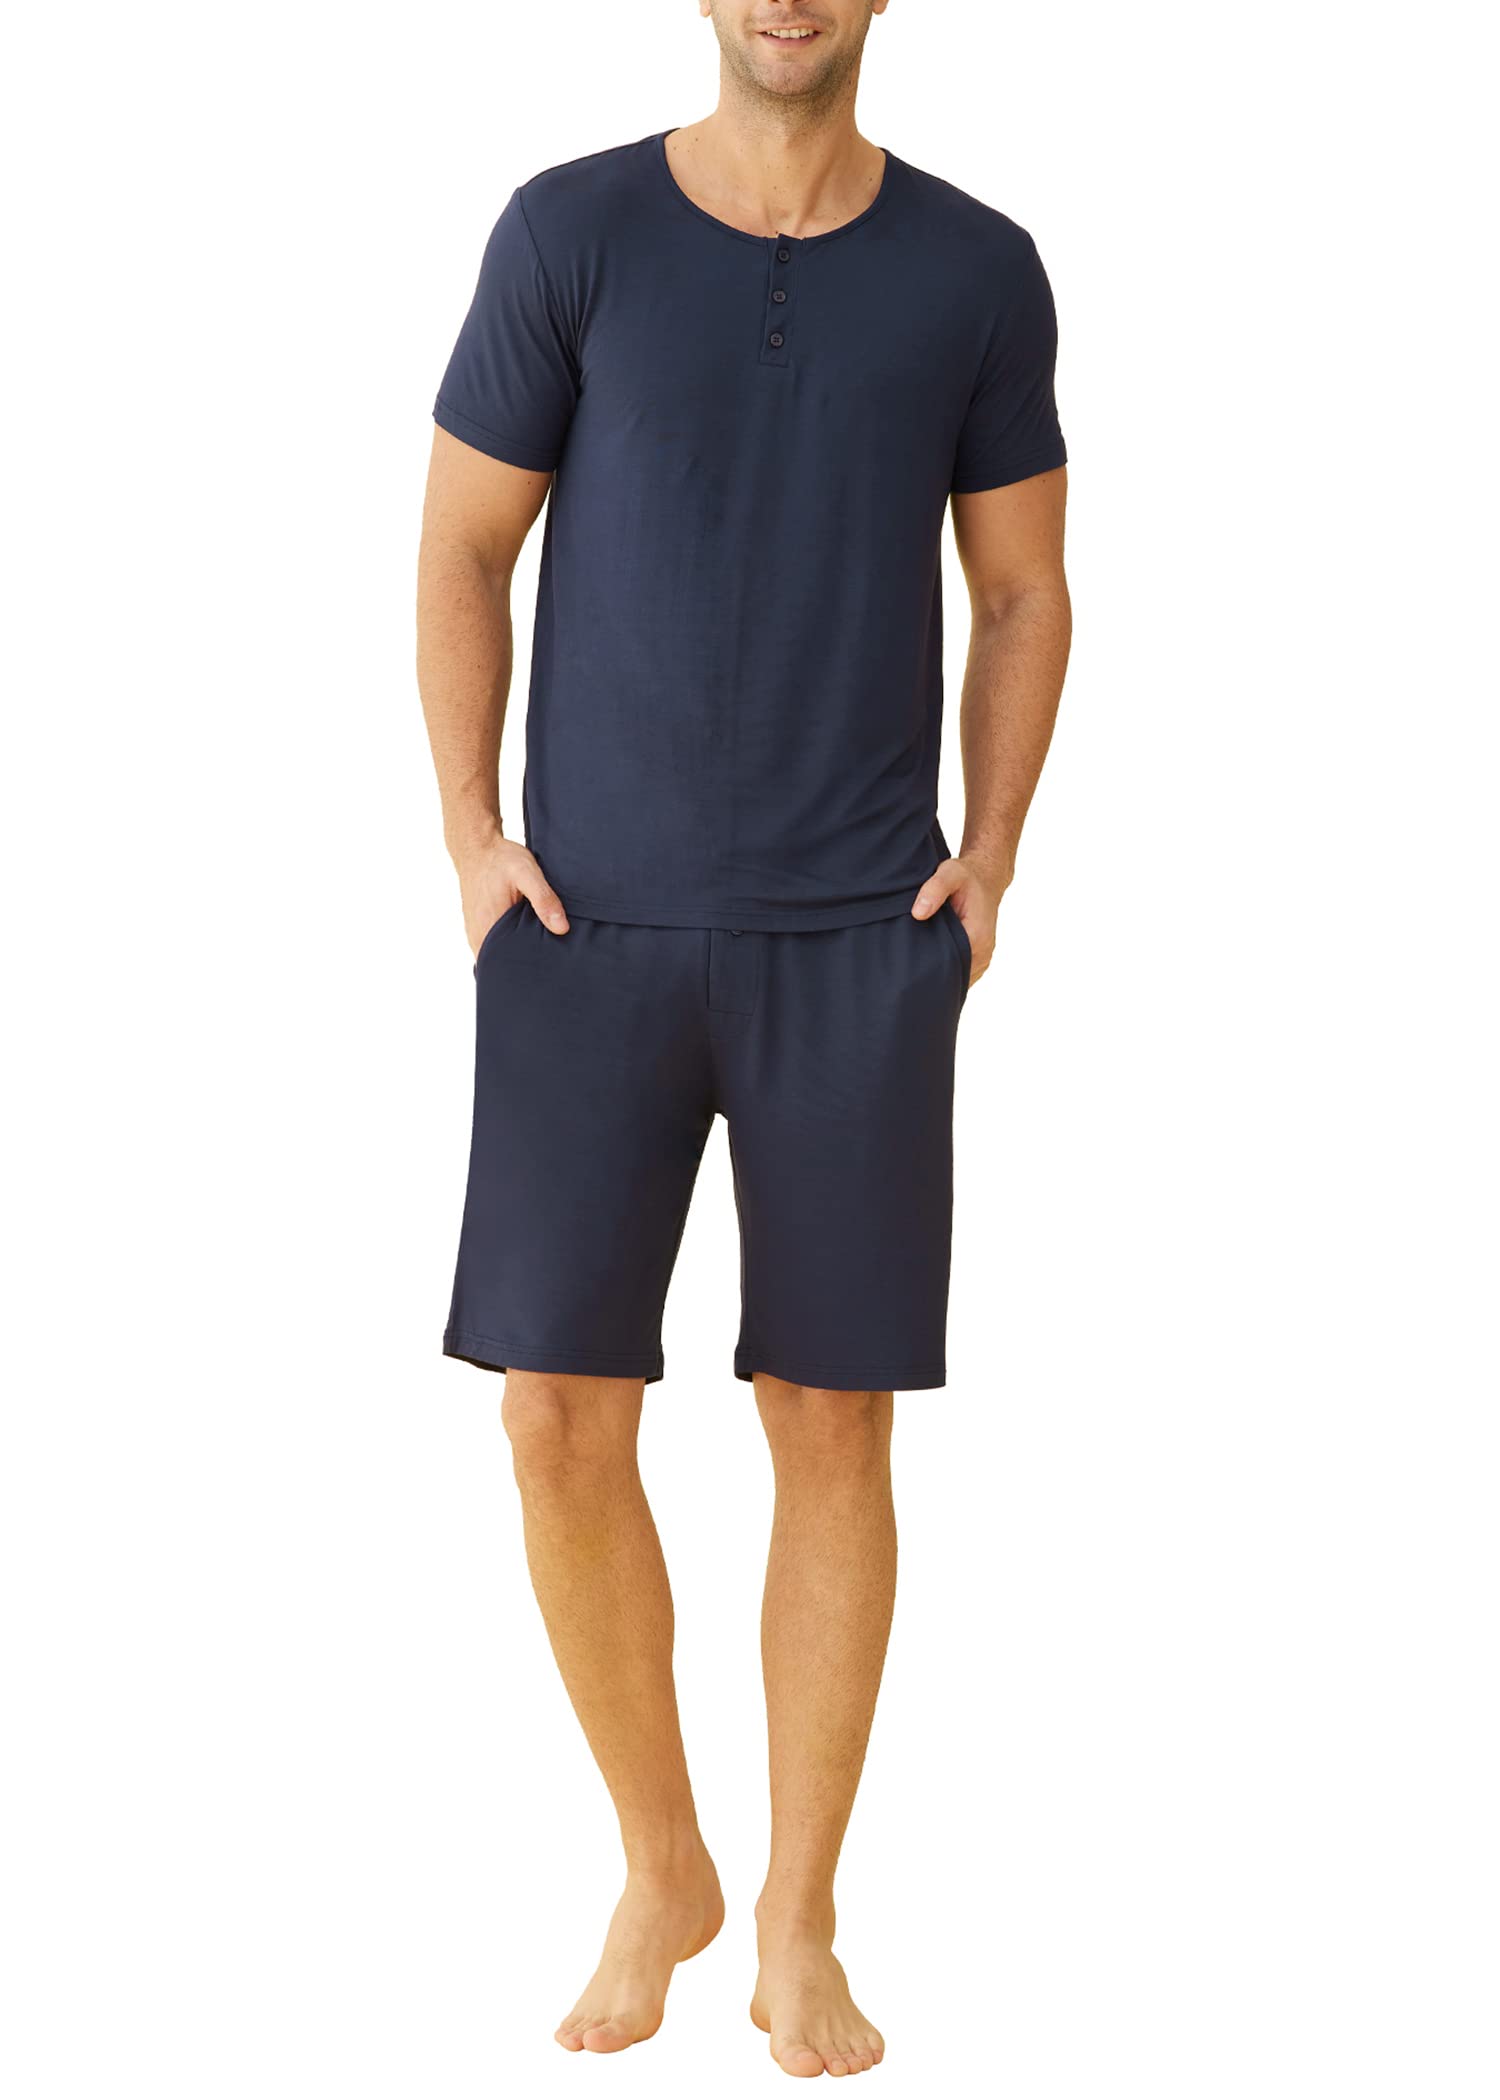 Men's Bamboo Viscose Henley Shirt Lounge Shorts Pajama Set - Latuza